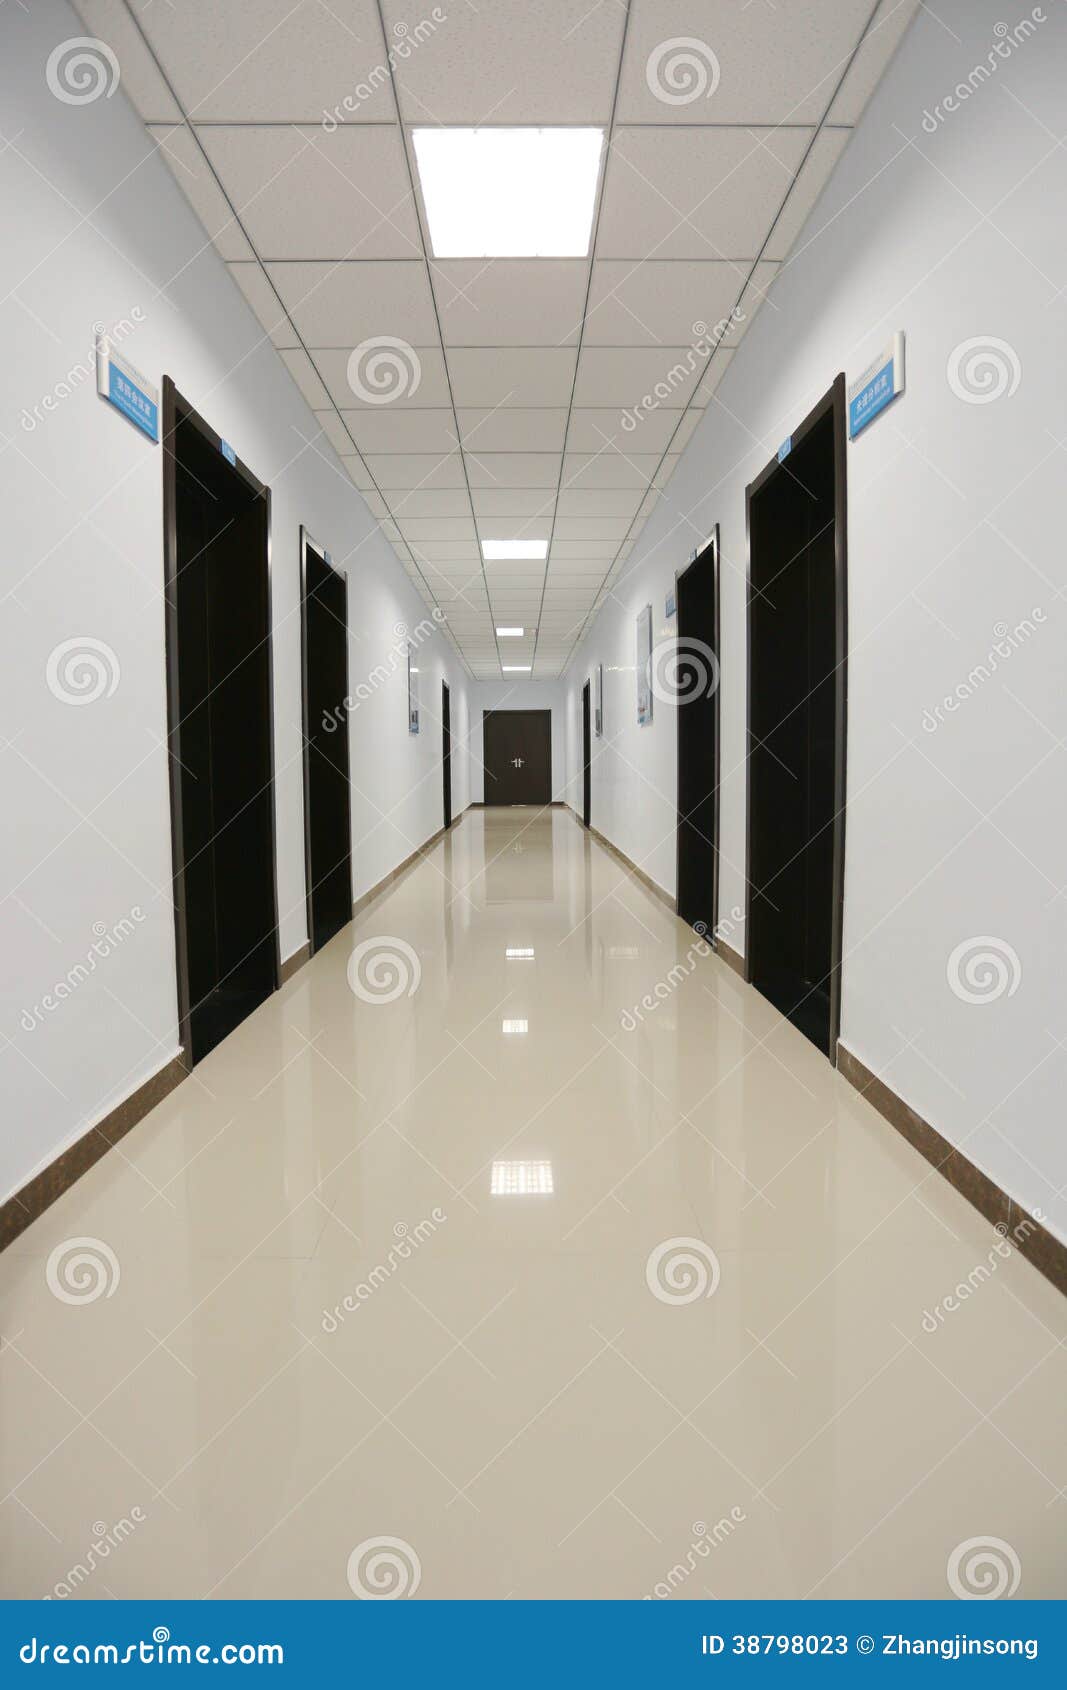 office hallway interior building 38798023